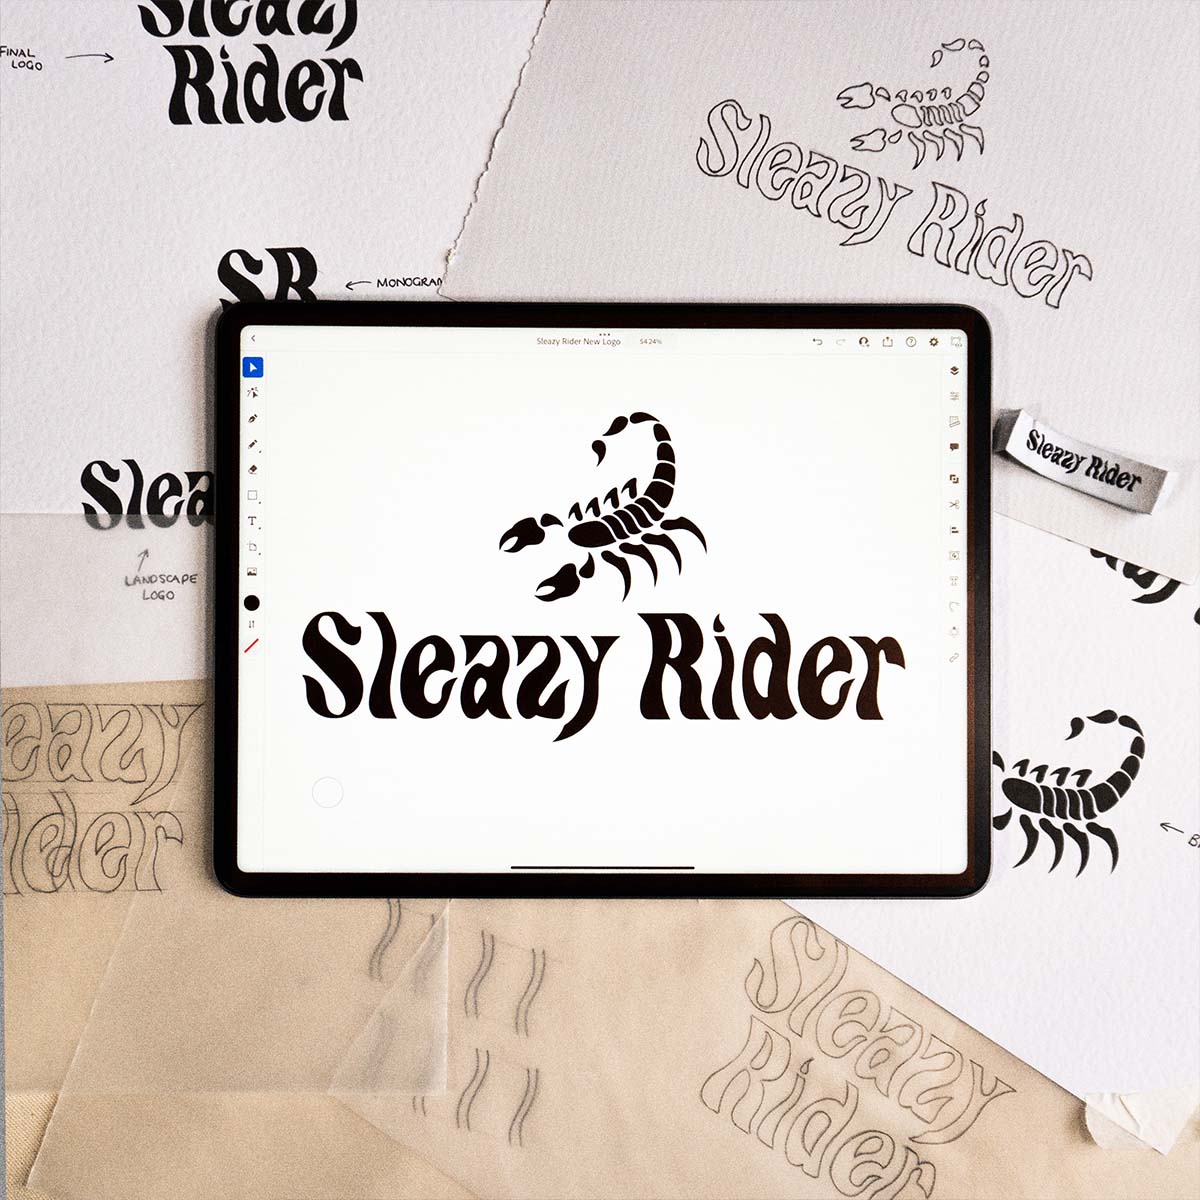 Sleazy Rider logo on an iPad